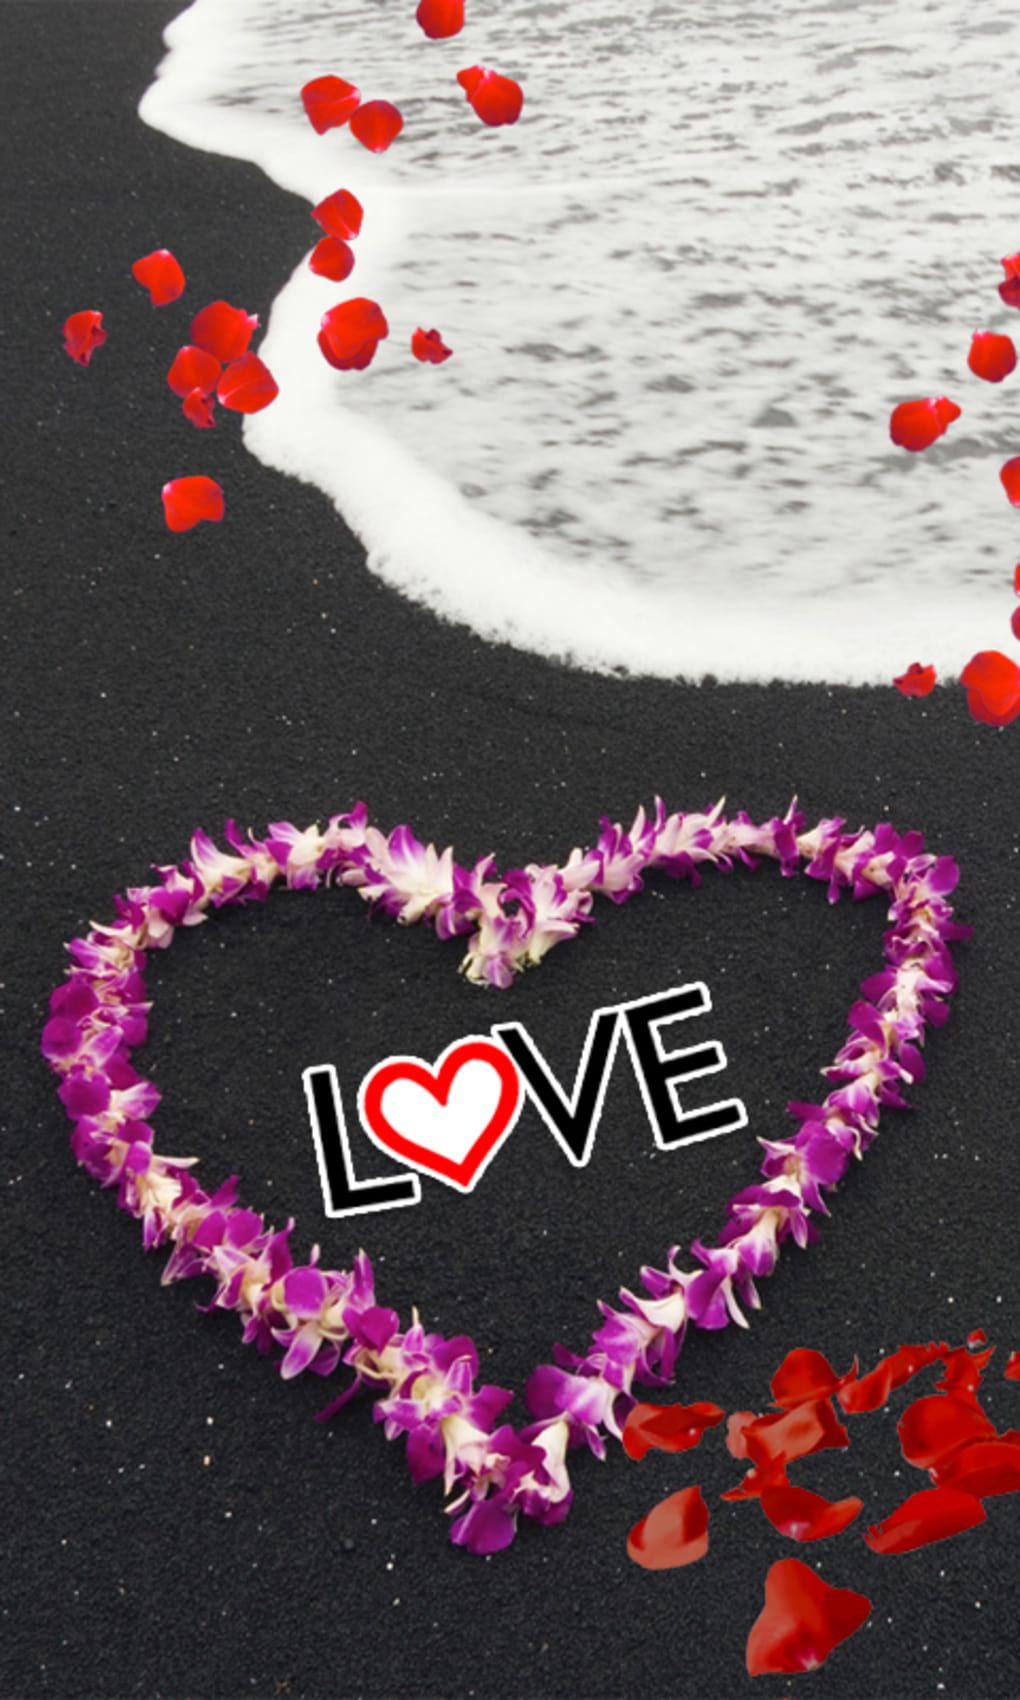 hd love wallpaper descargar para android,corazón,amor,rosado,rojo,texto